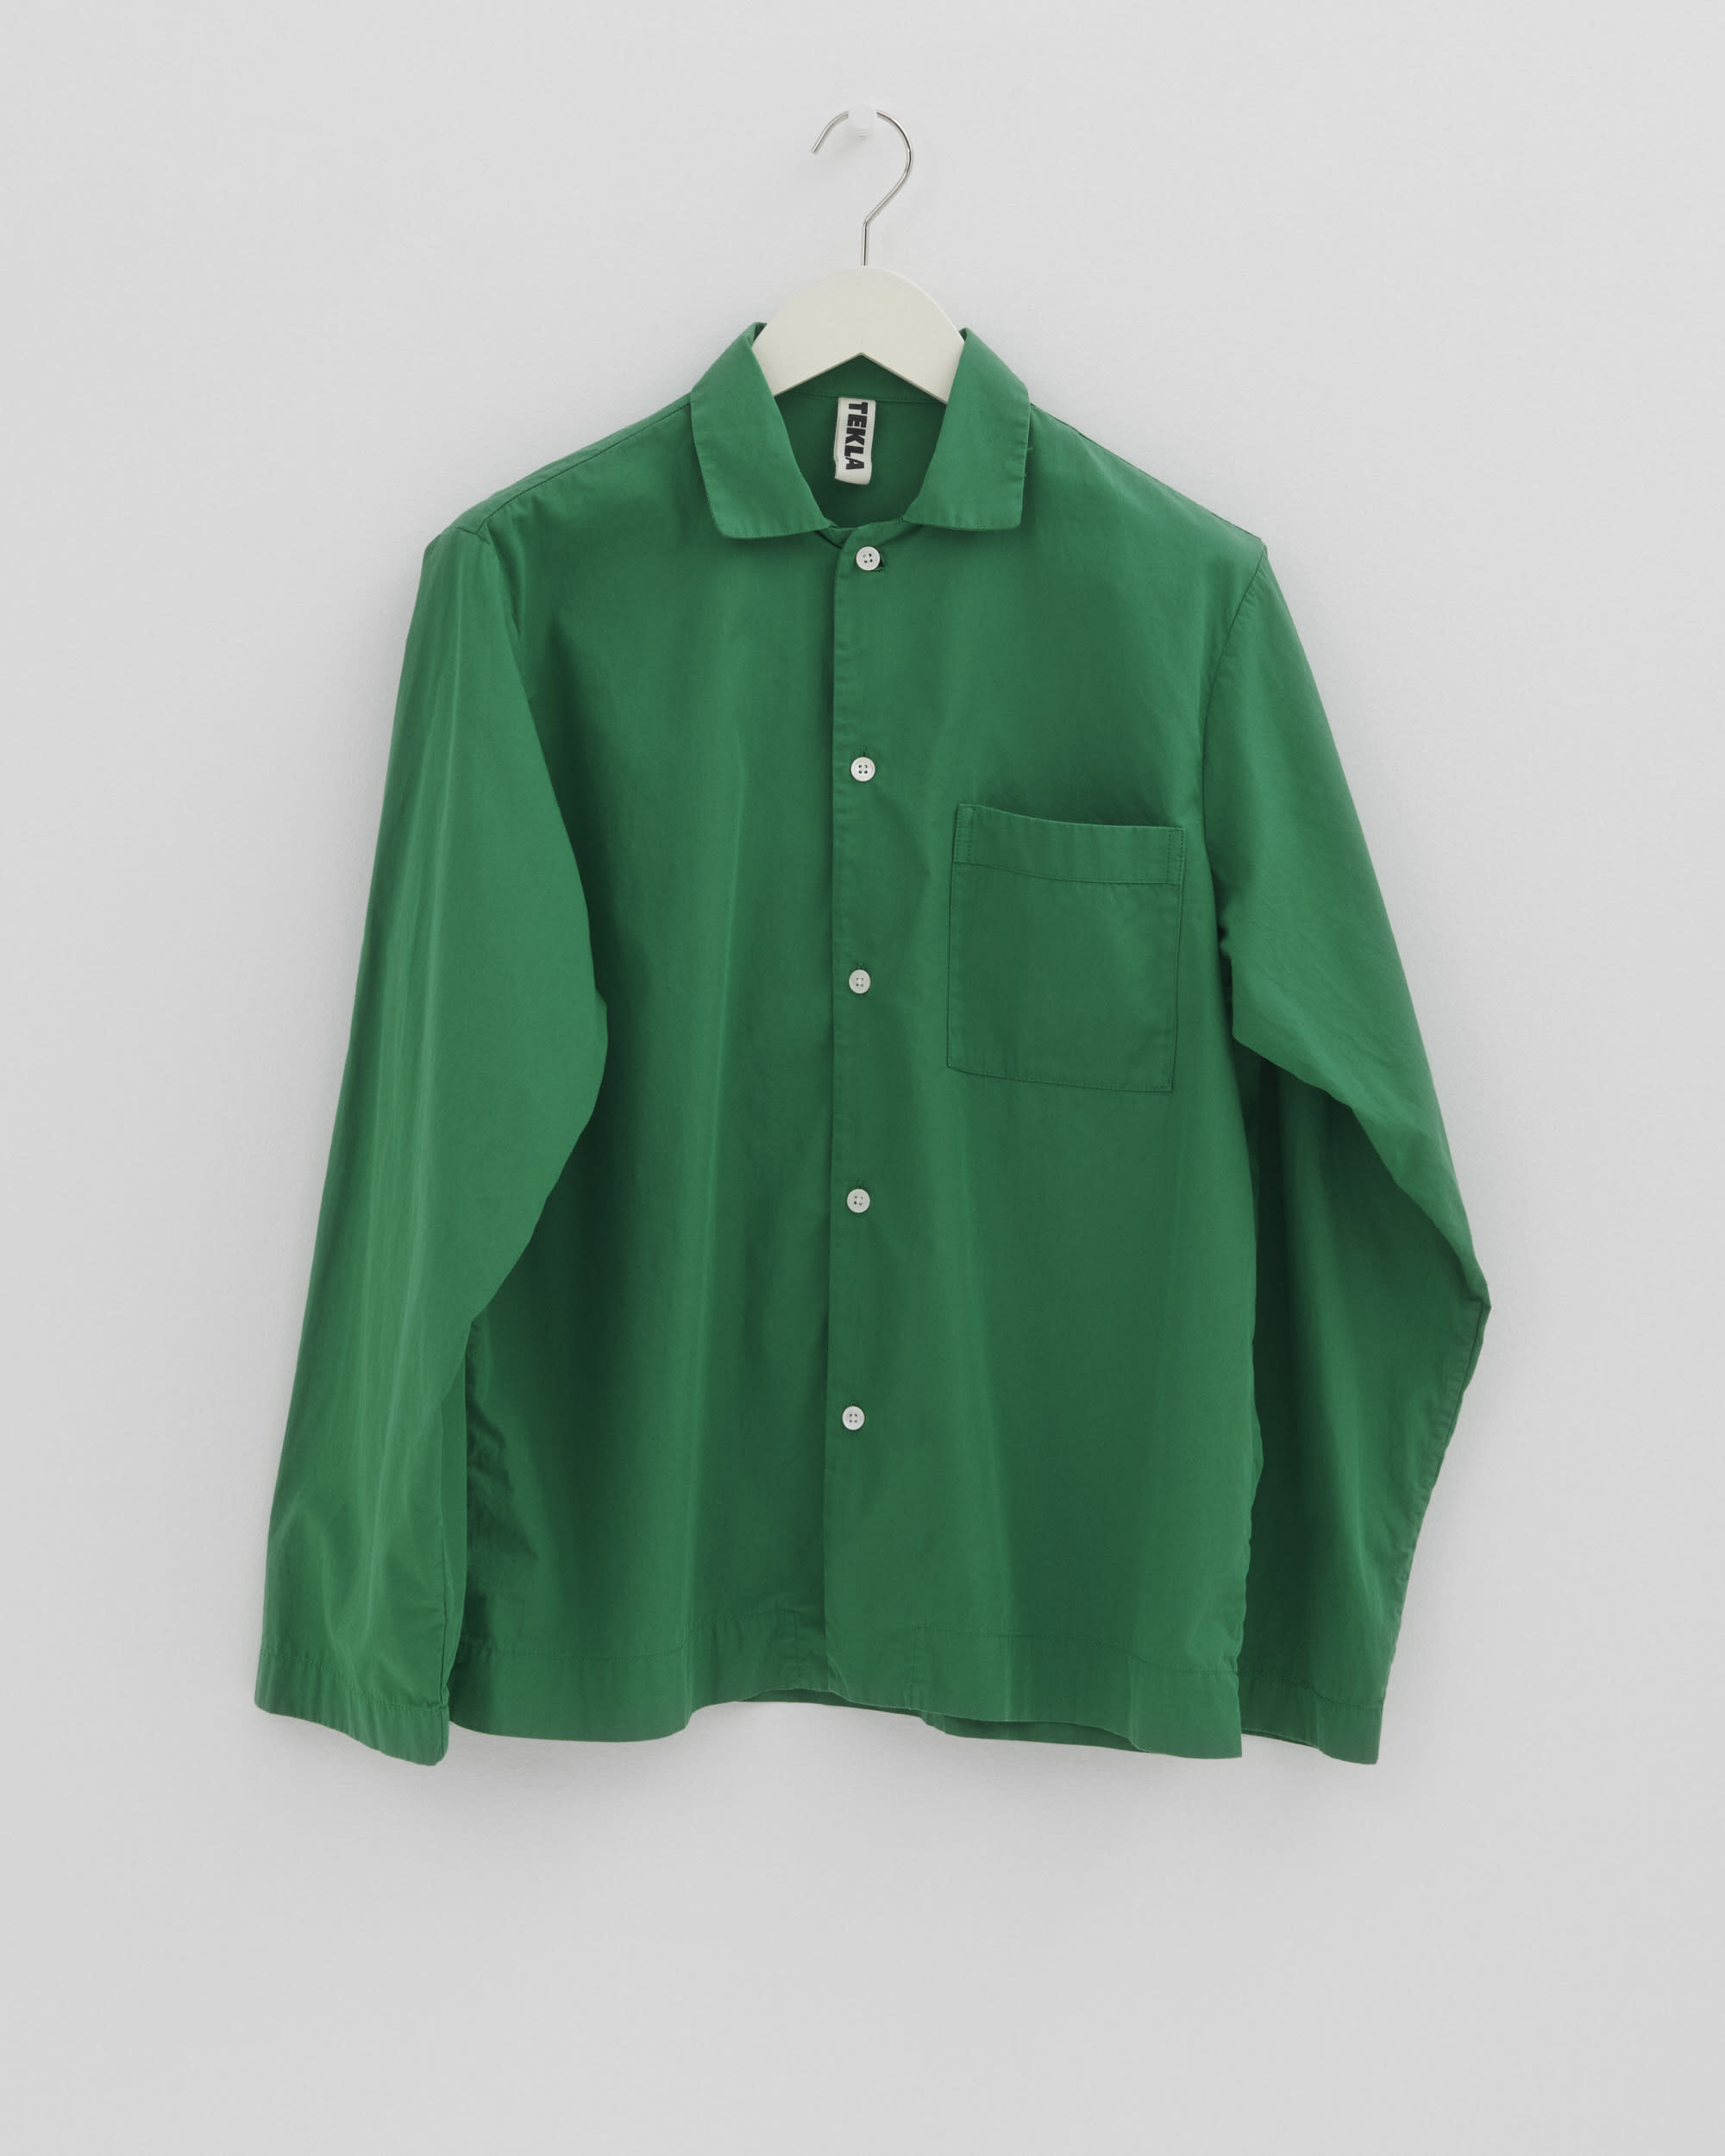 poplinsleepwear_conifergreen_shirt_7_thumbnail